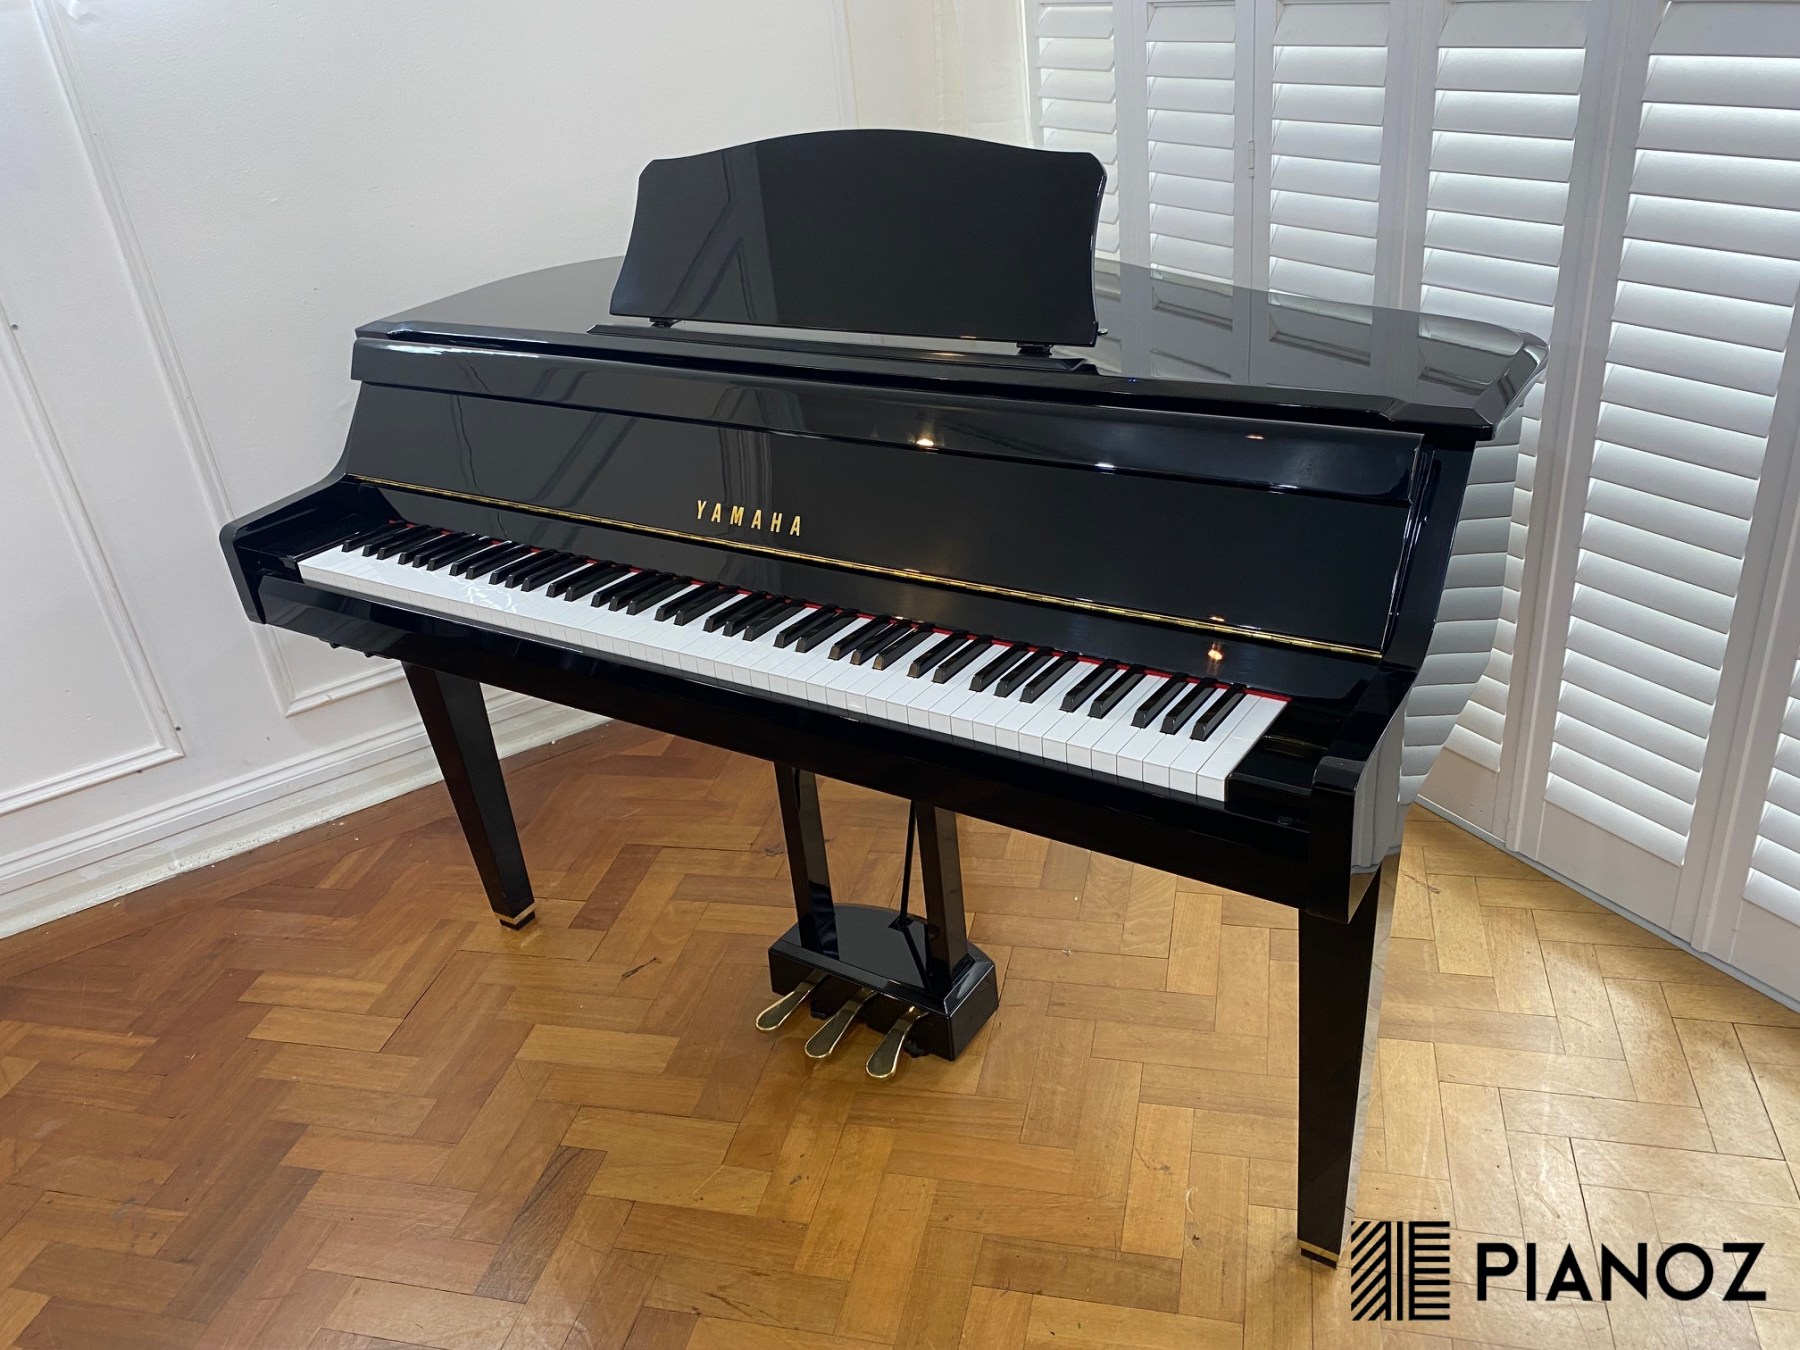 Yamaha Hybrid Baby Grand Digital Piano piano for sale in UK